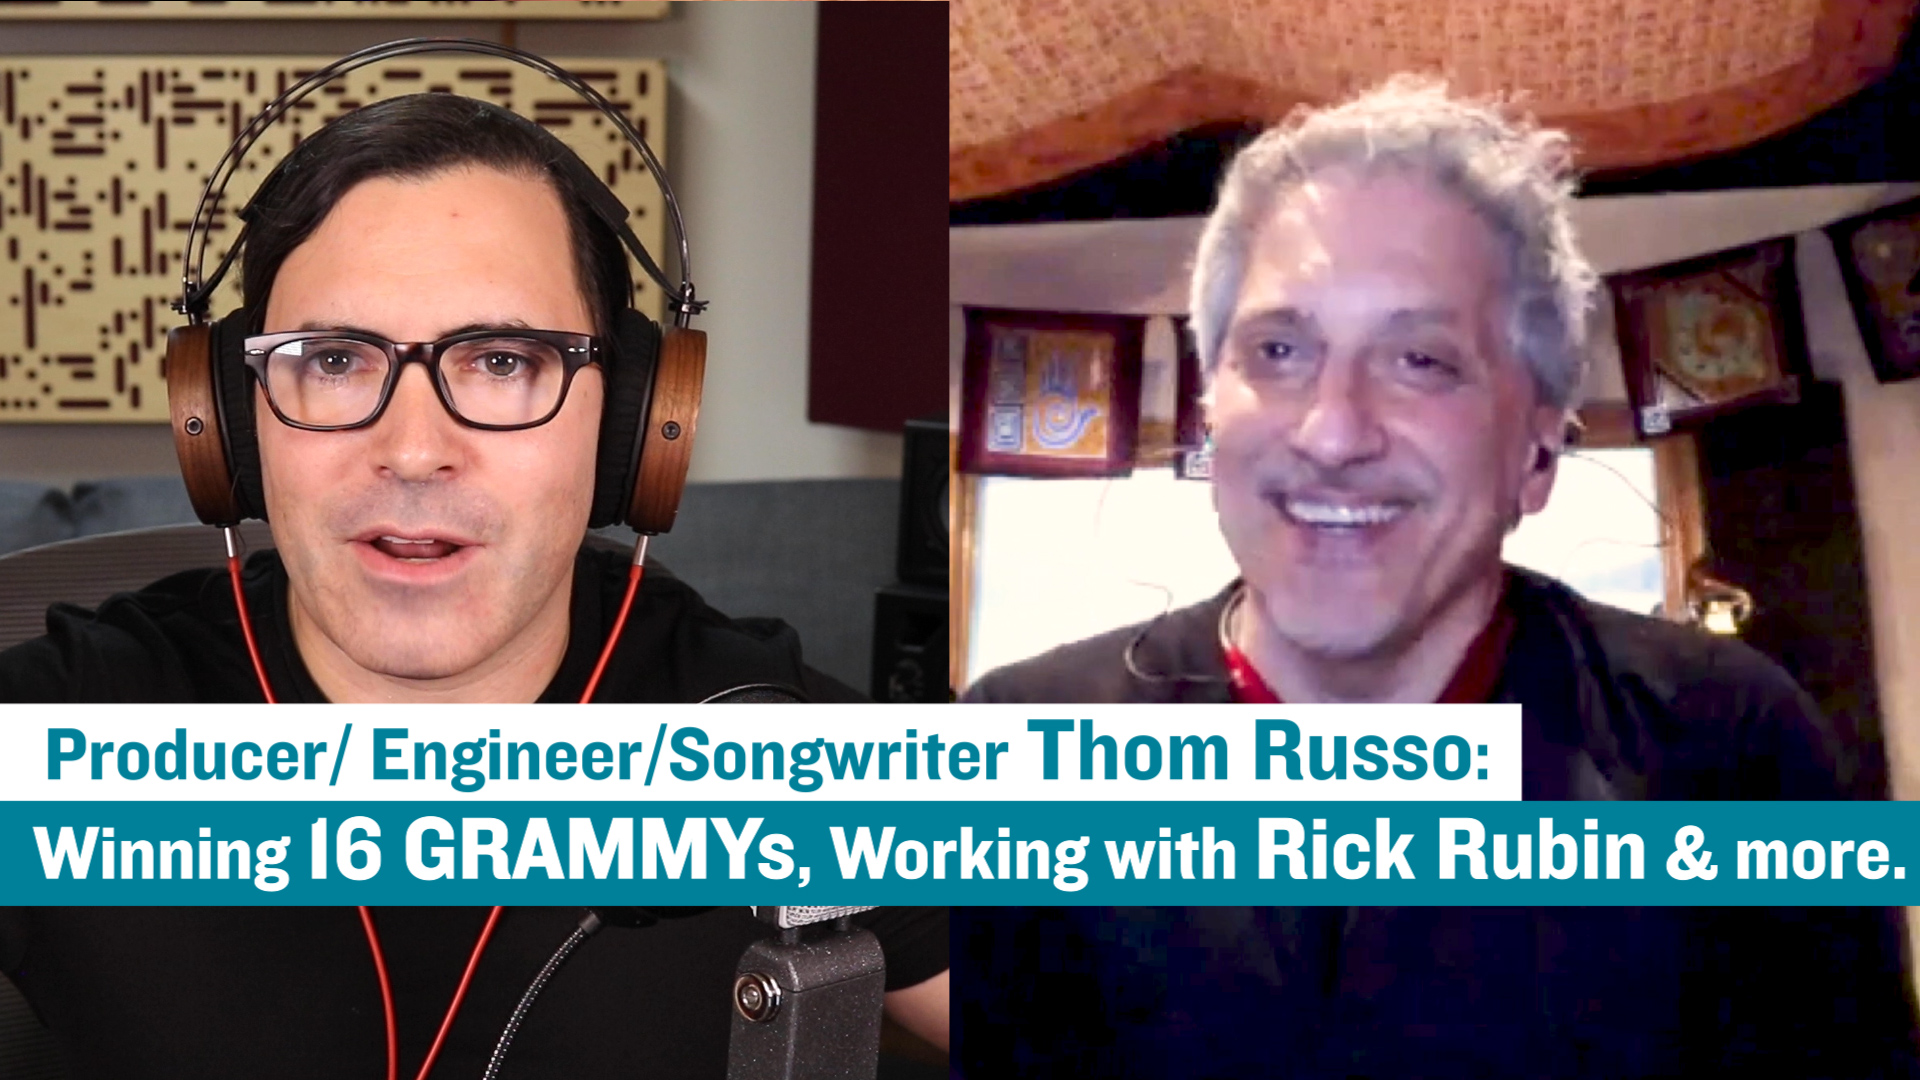 Thom Russo on Winning 16 GRAMMYs, Working w/ Rick Rubin, & Latin Music Production